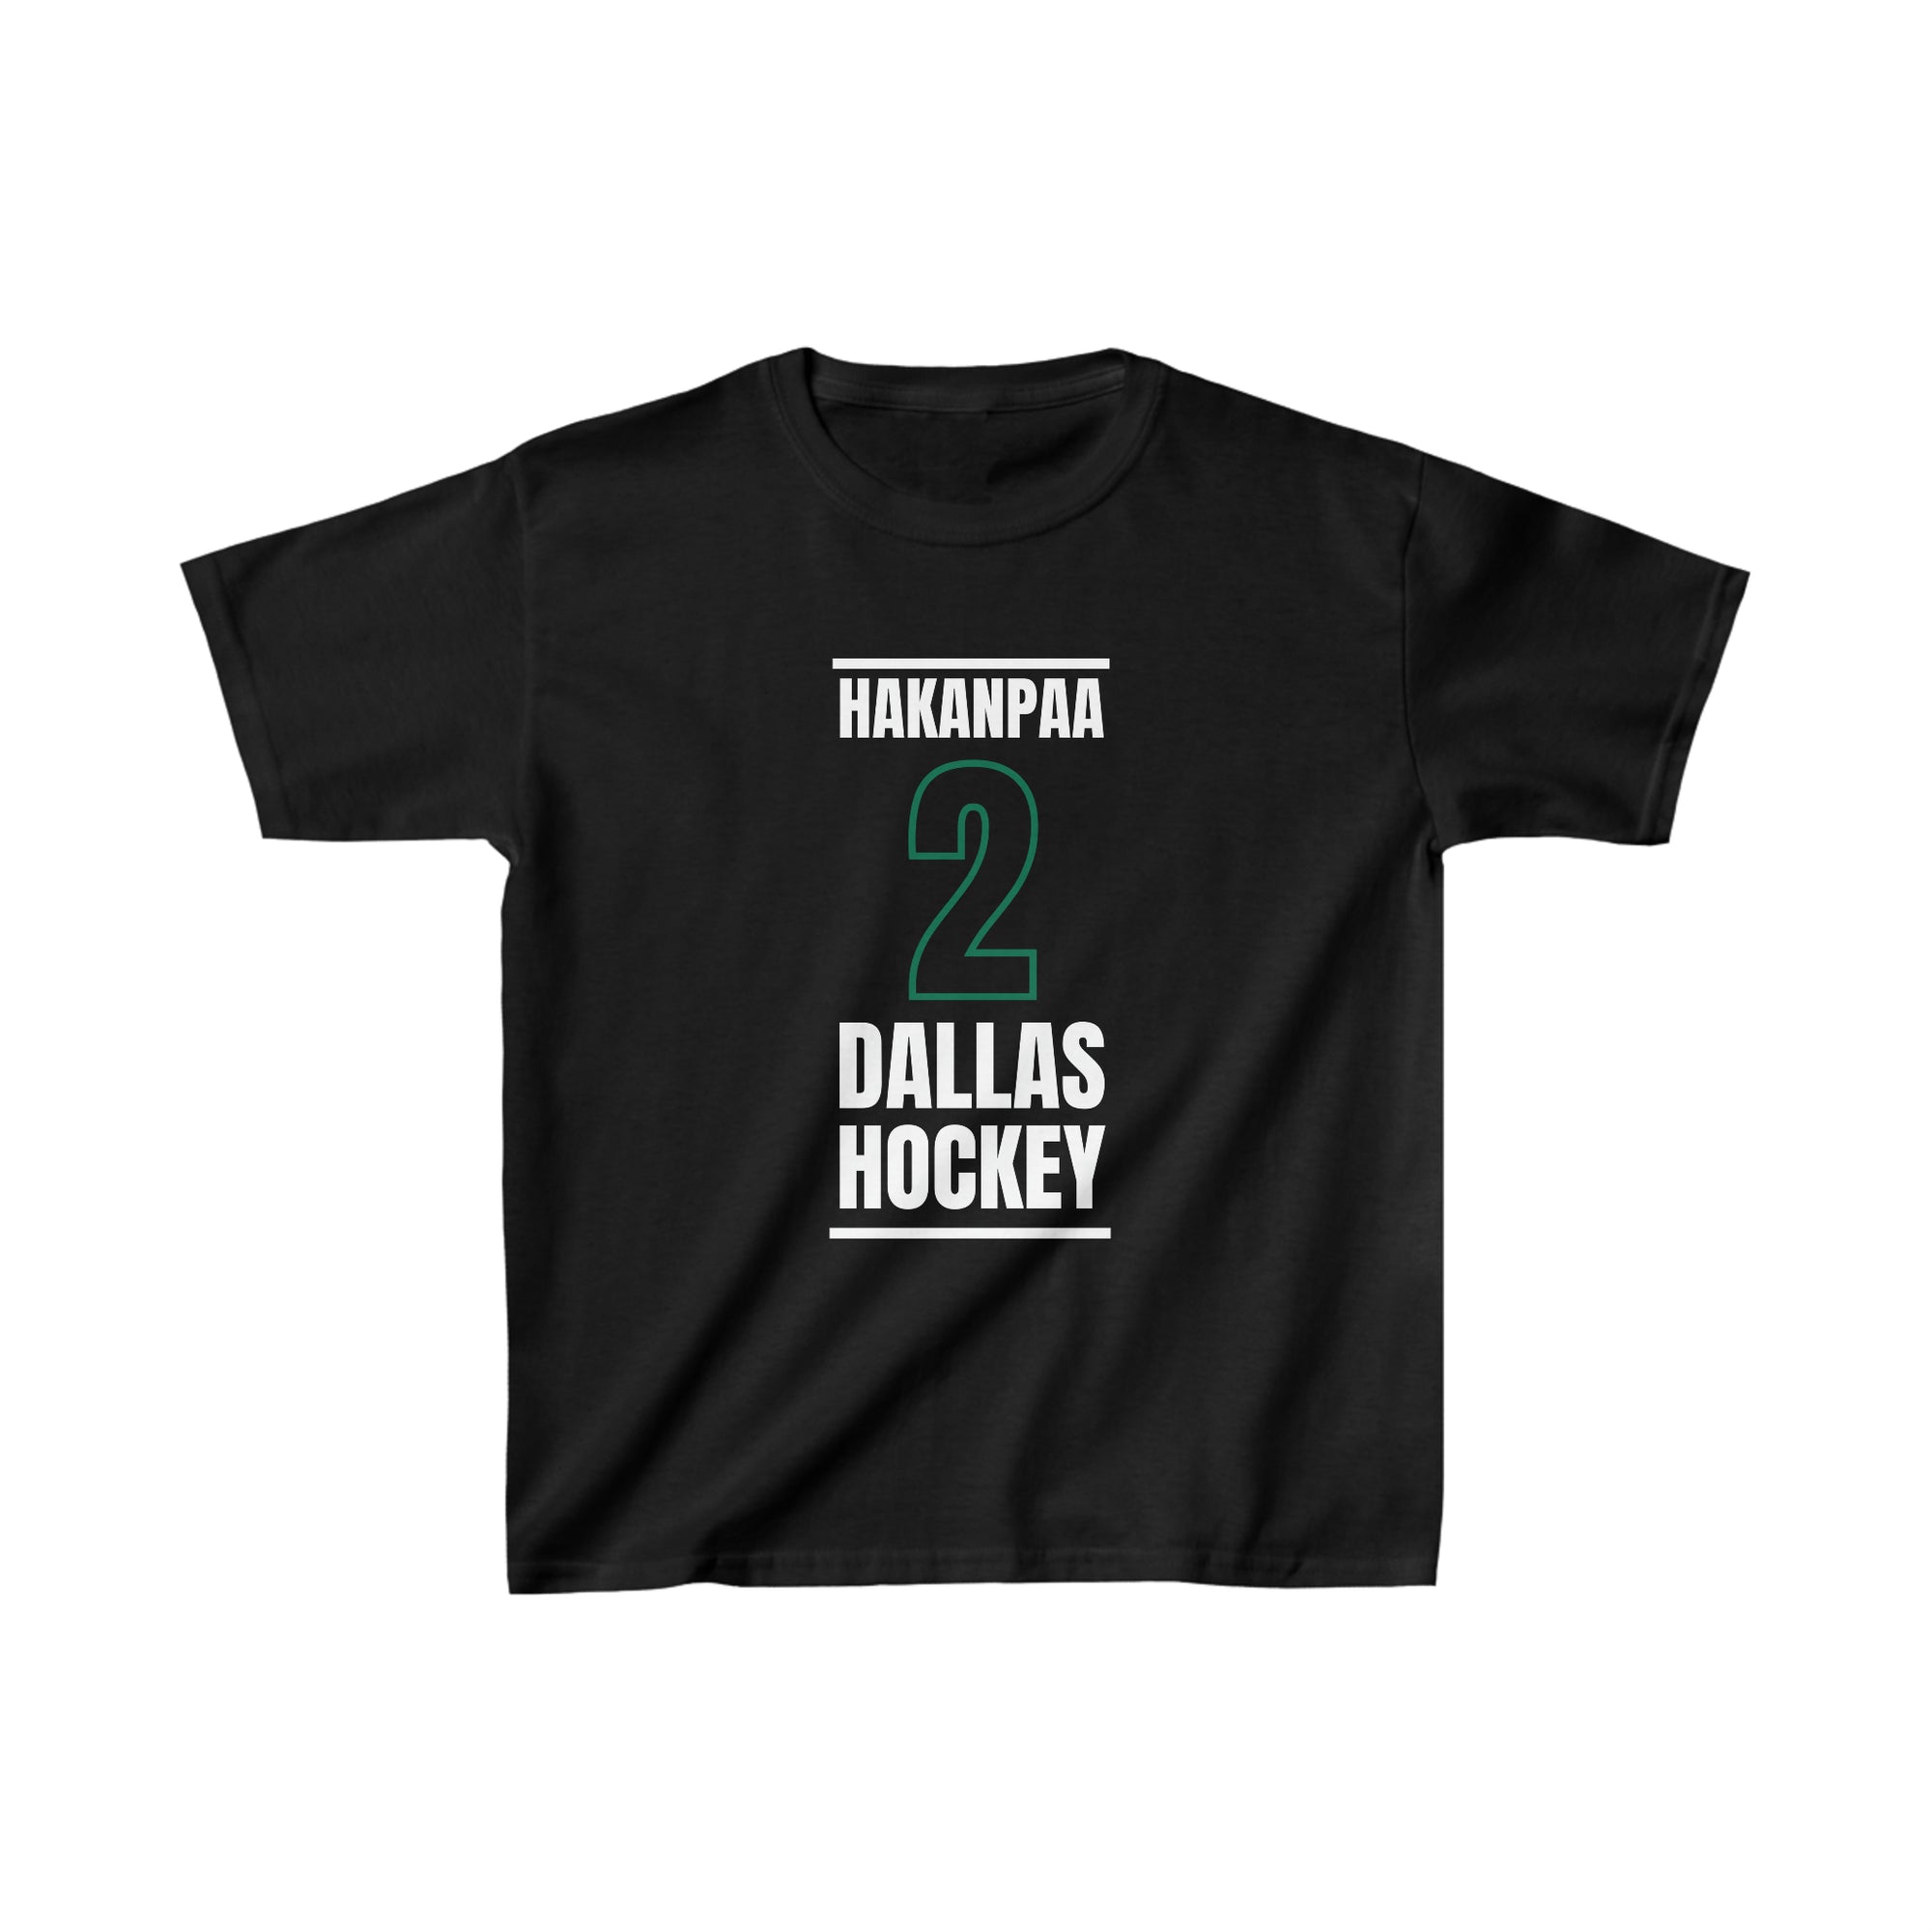 Hakanpaa 2 Dallas Hockey Black Vertical Design Kids Tee